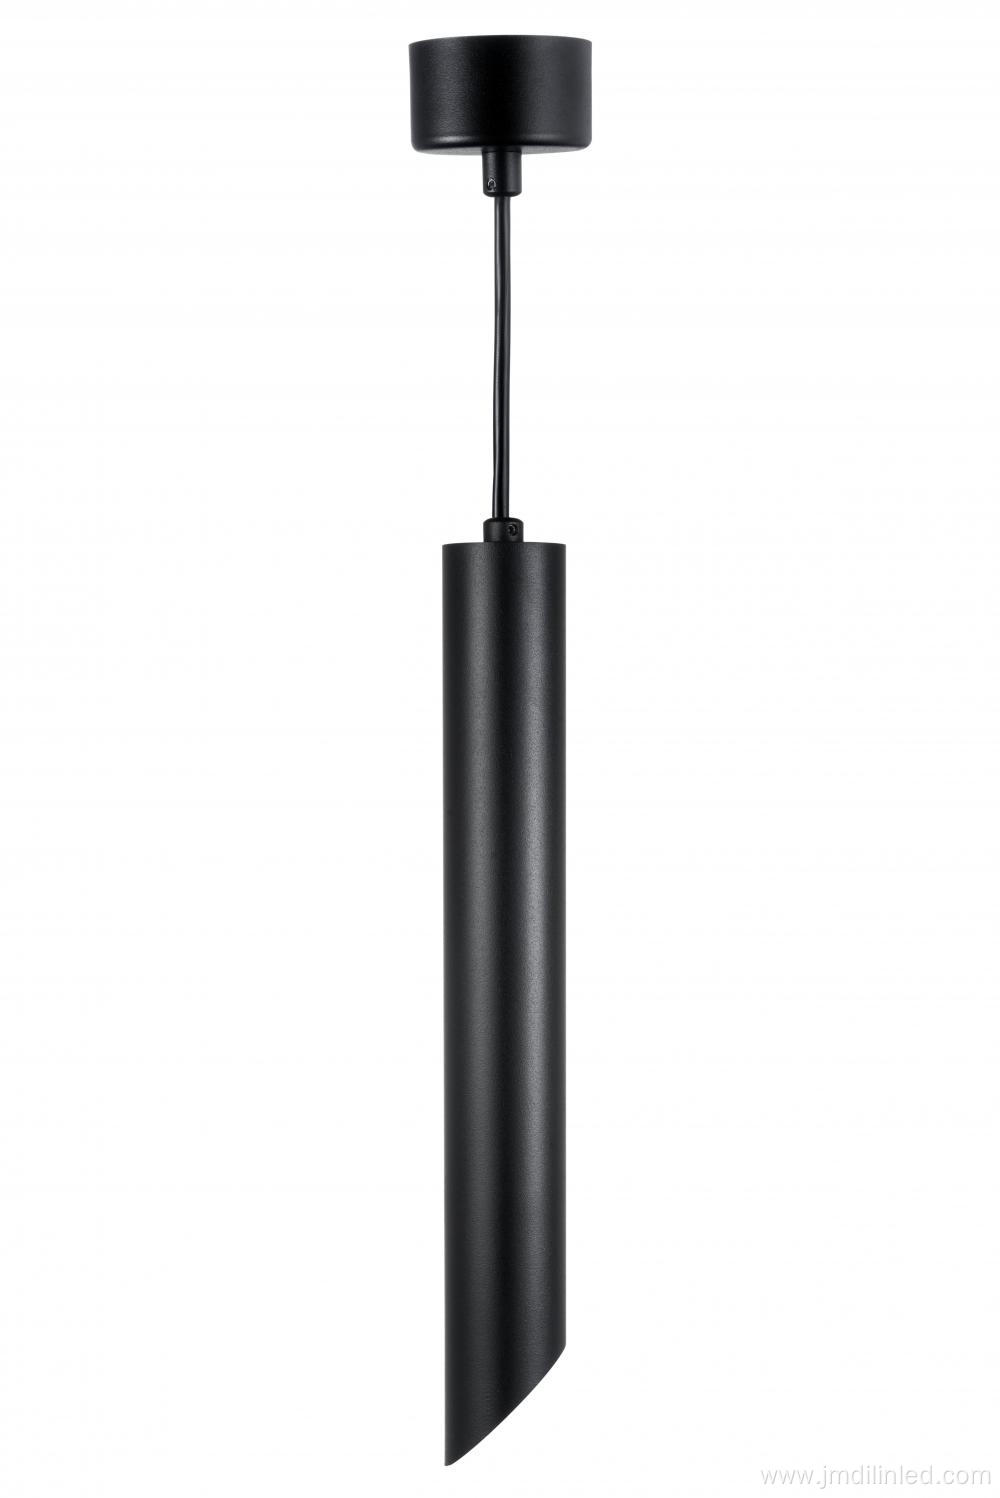 Bevel pendant light fixture with GU10 holder